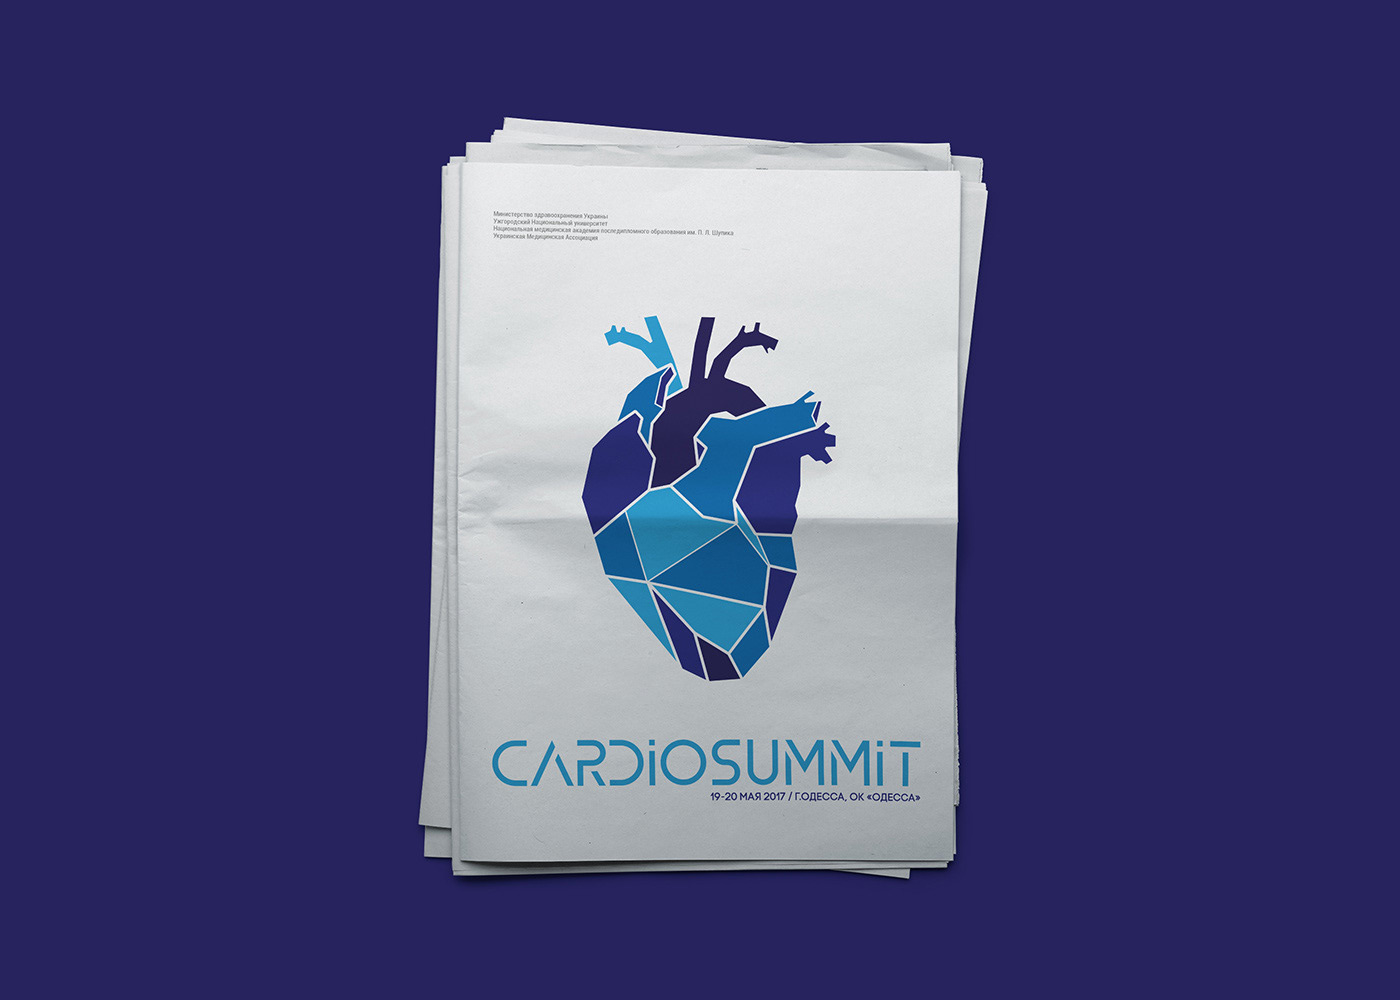 CARDIOSUMMIT cardio cardiology 2017year heart Health medical medicine Event identity